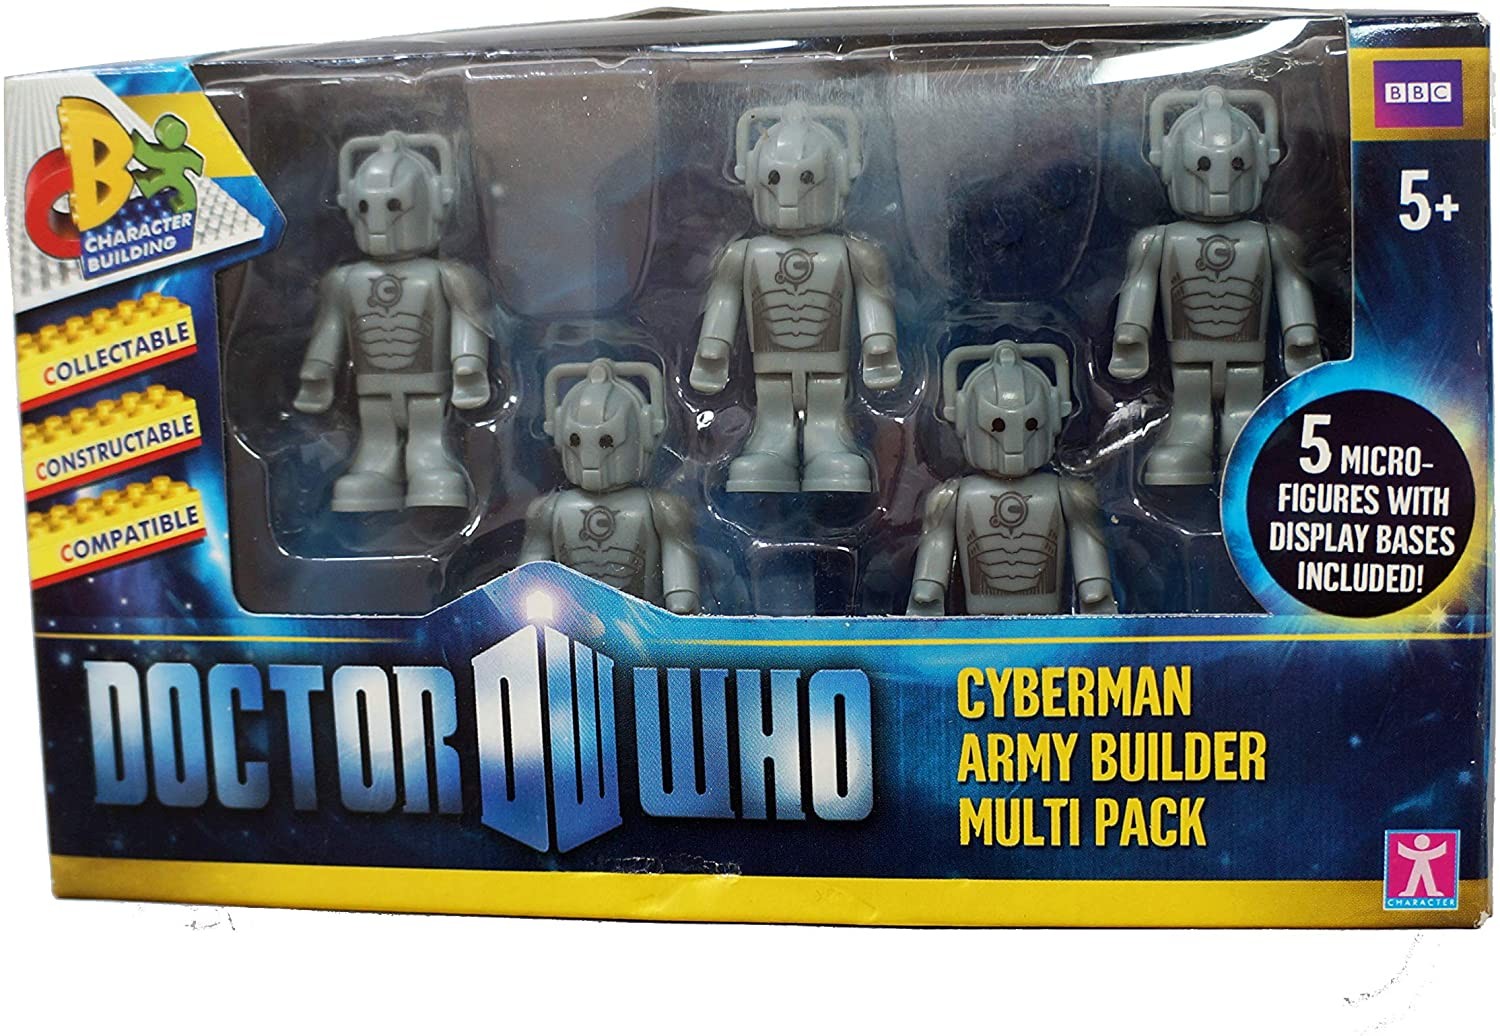 039110 - Cyberman army builder